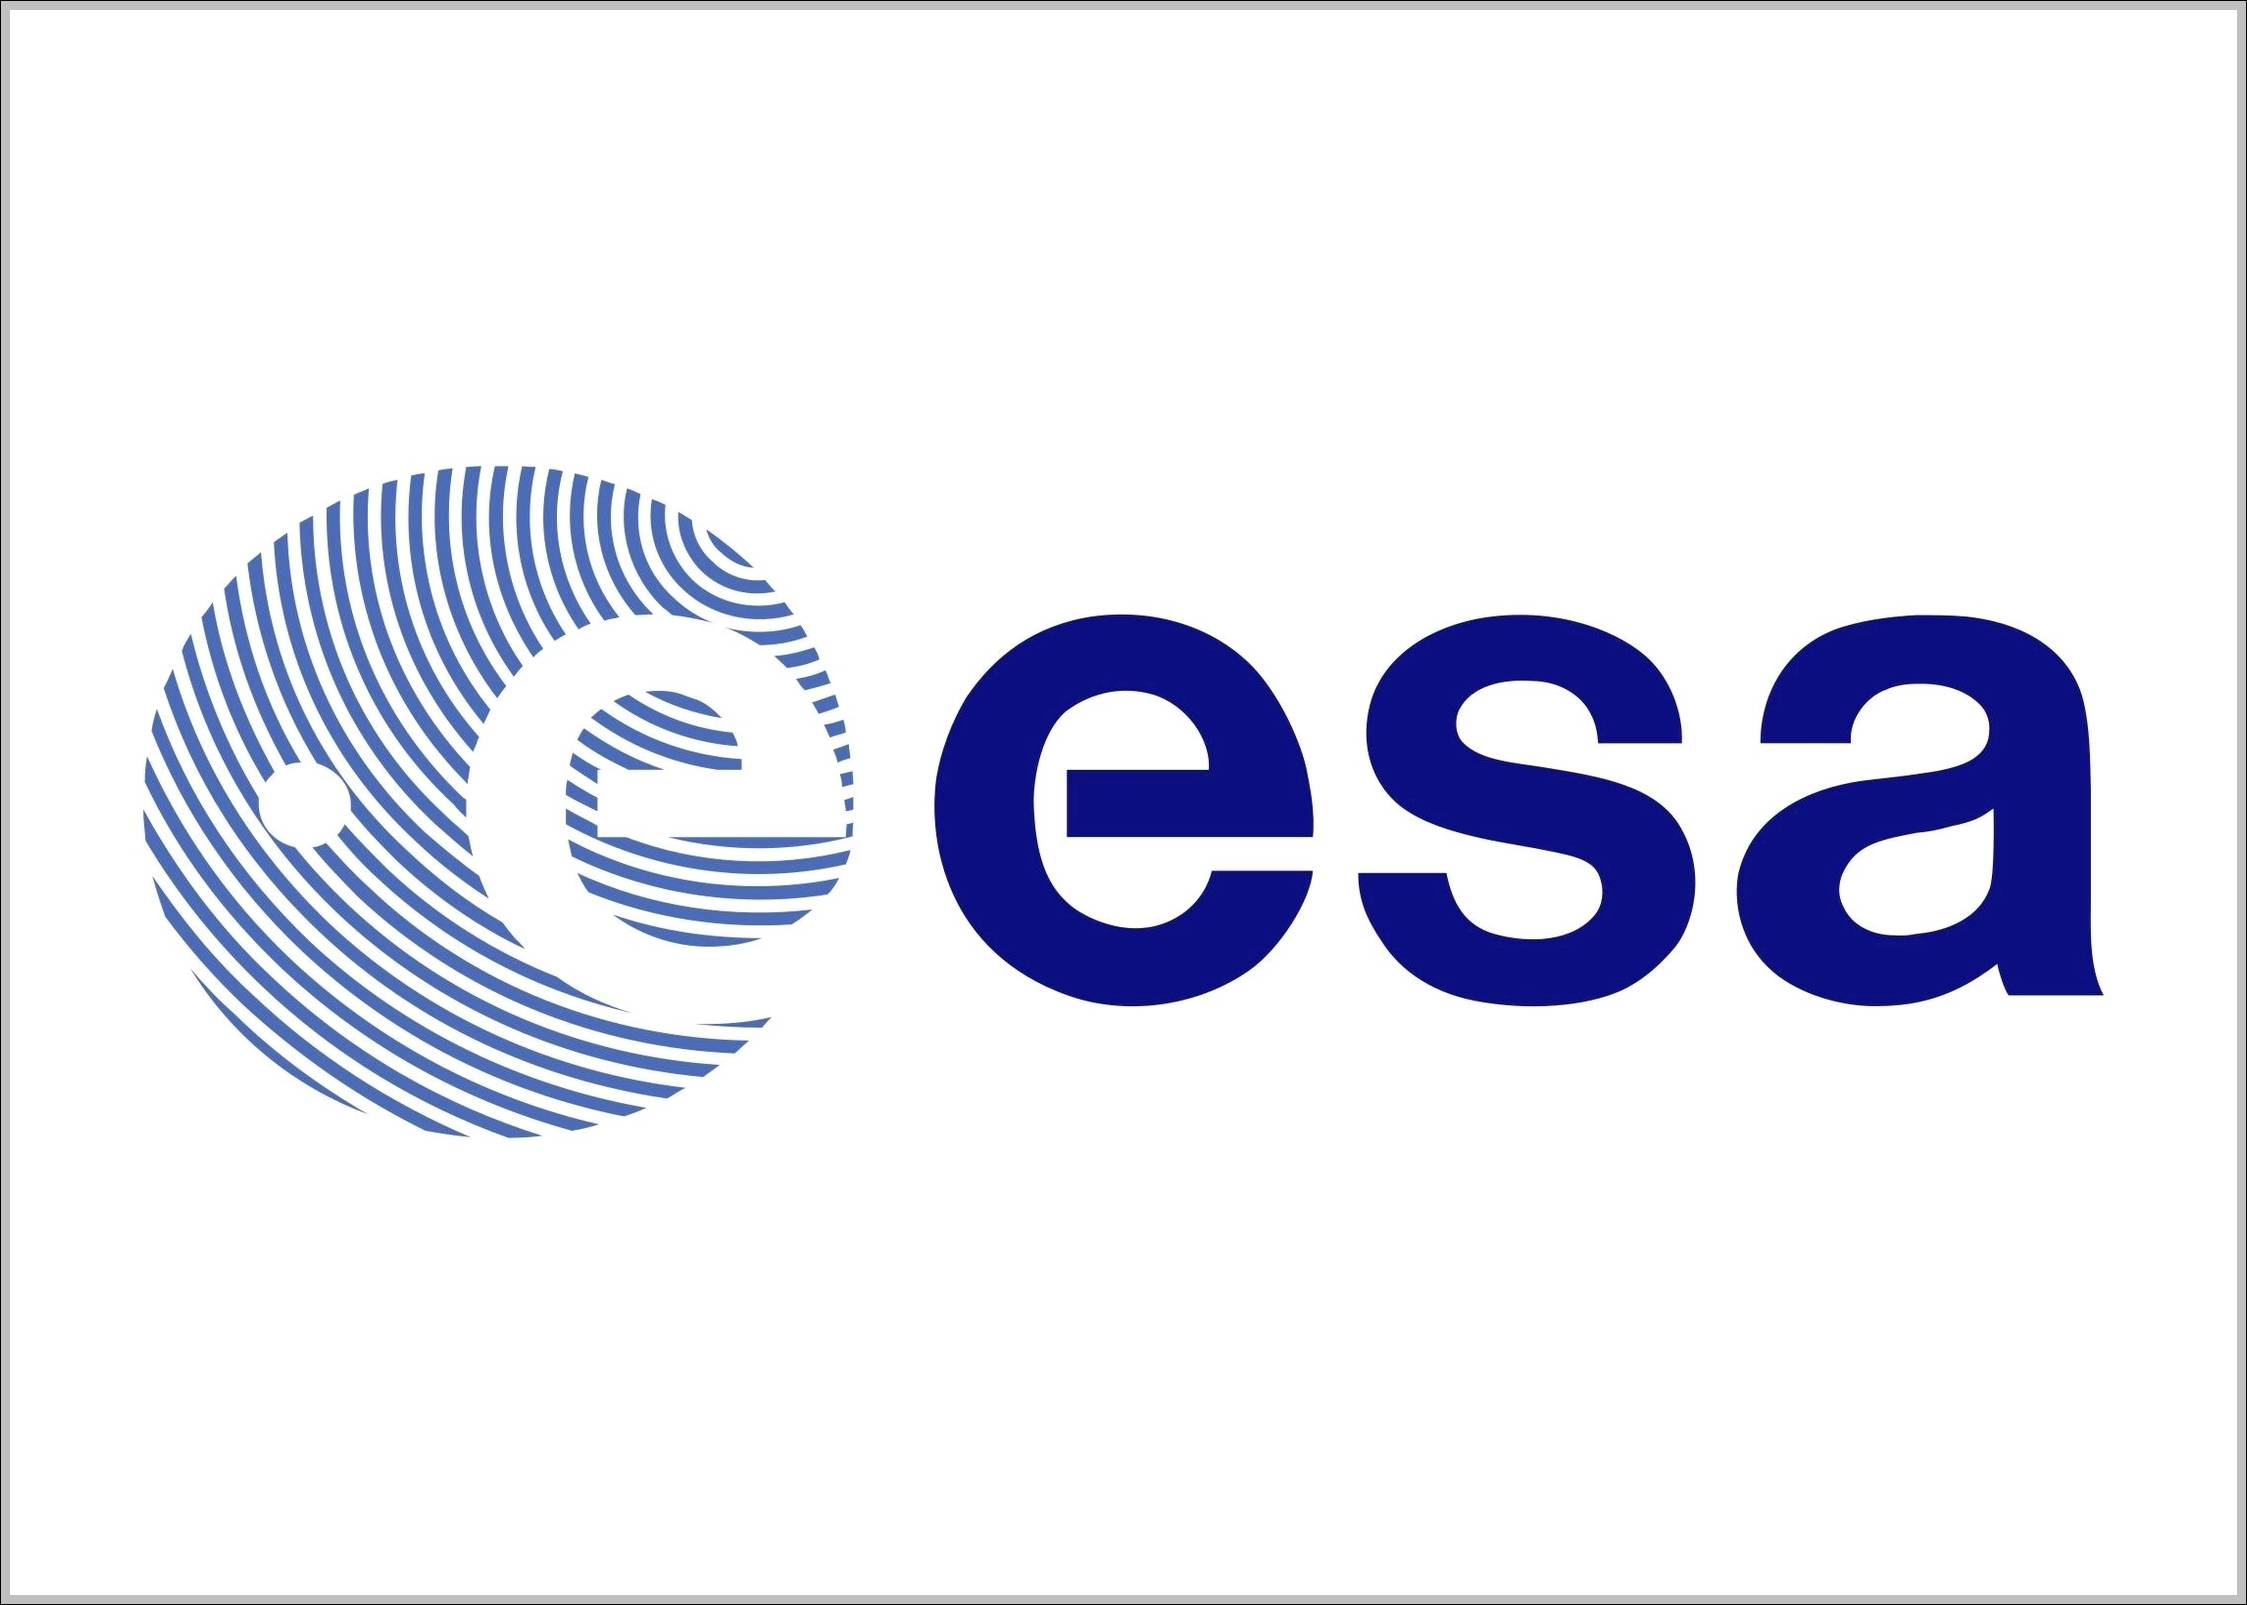 ESA logo and sign